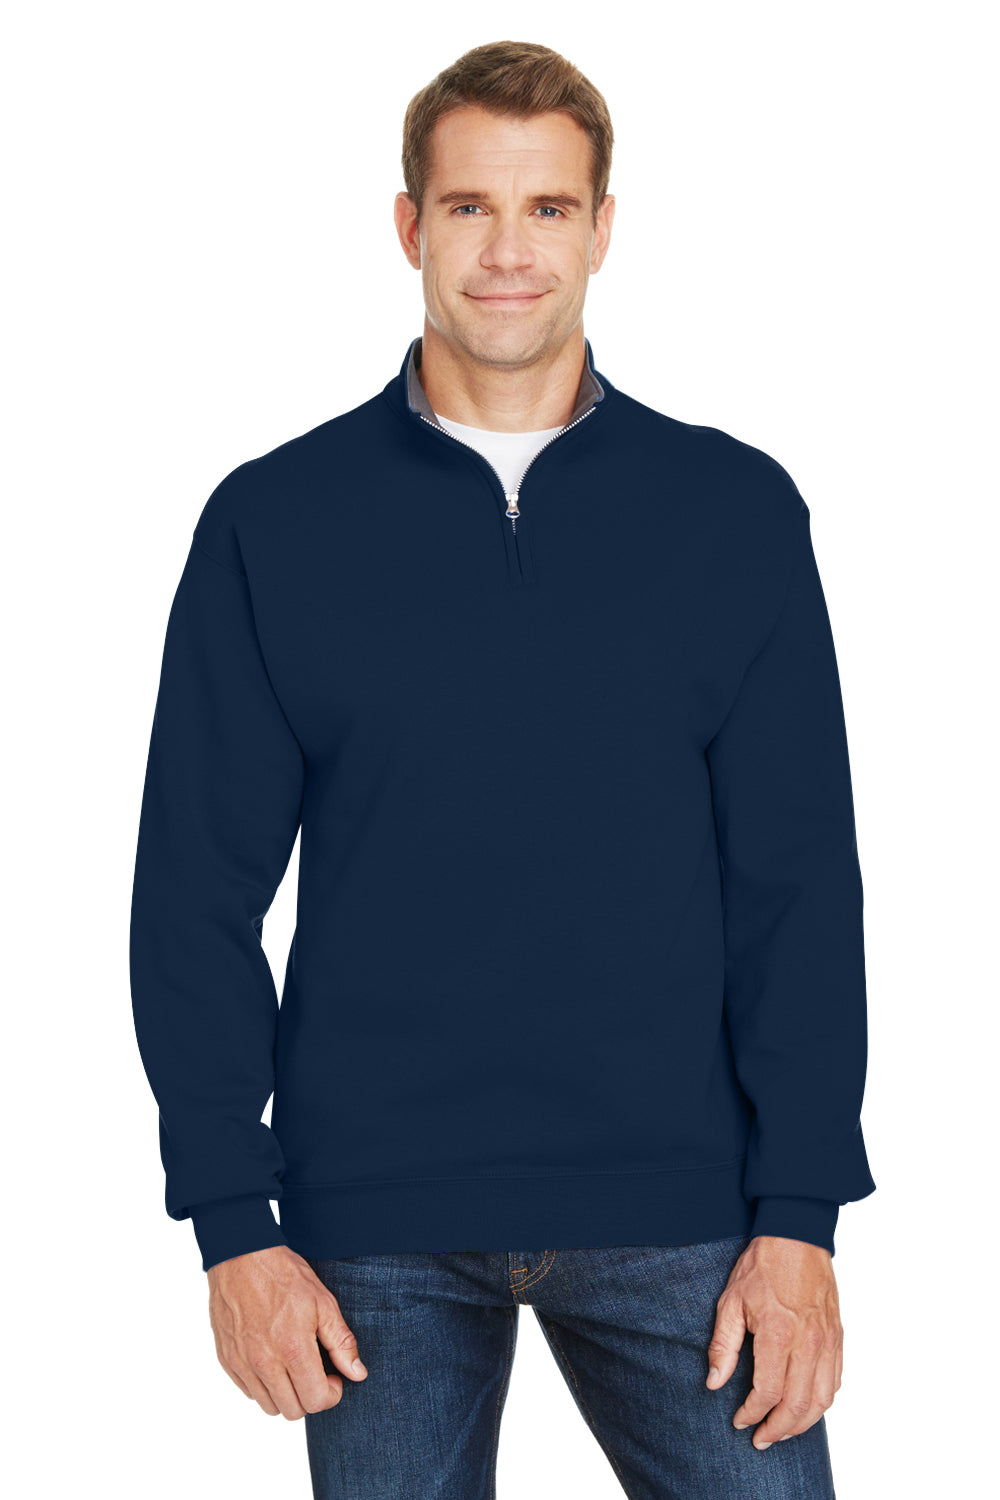 Fruit Of The Loom SF95R Mens Sofspun Fleece 1/4 Zip Sweatshirt Navy Blue Front